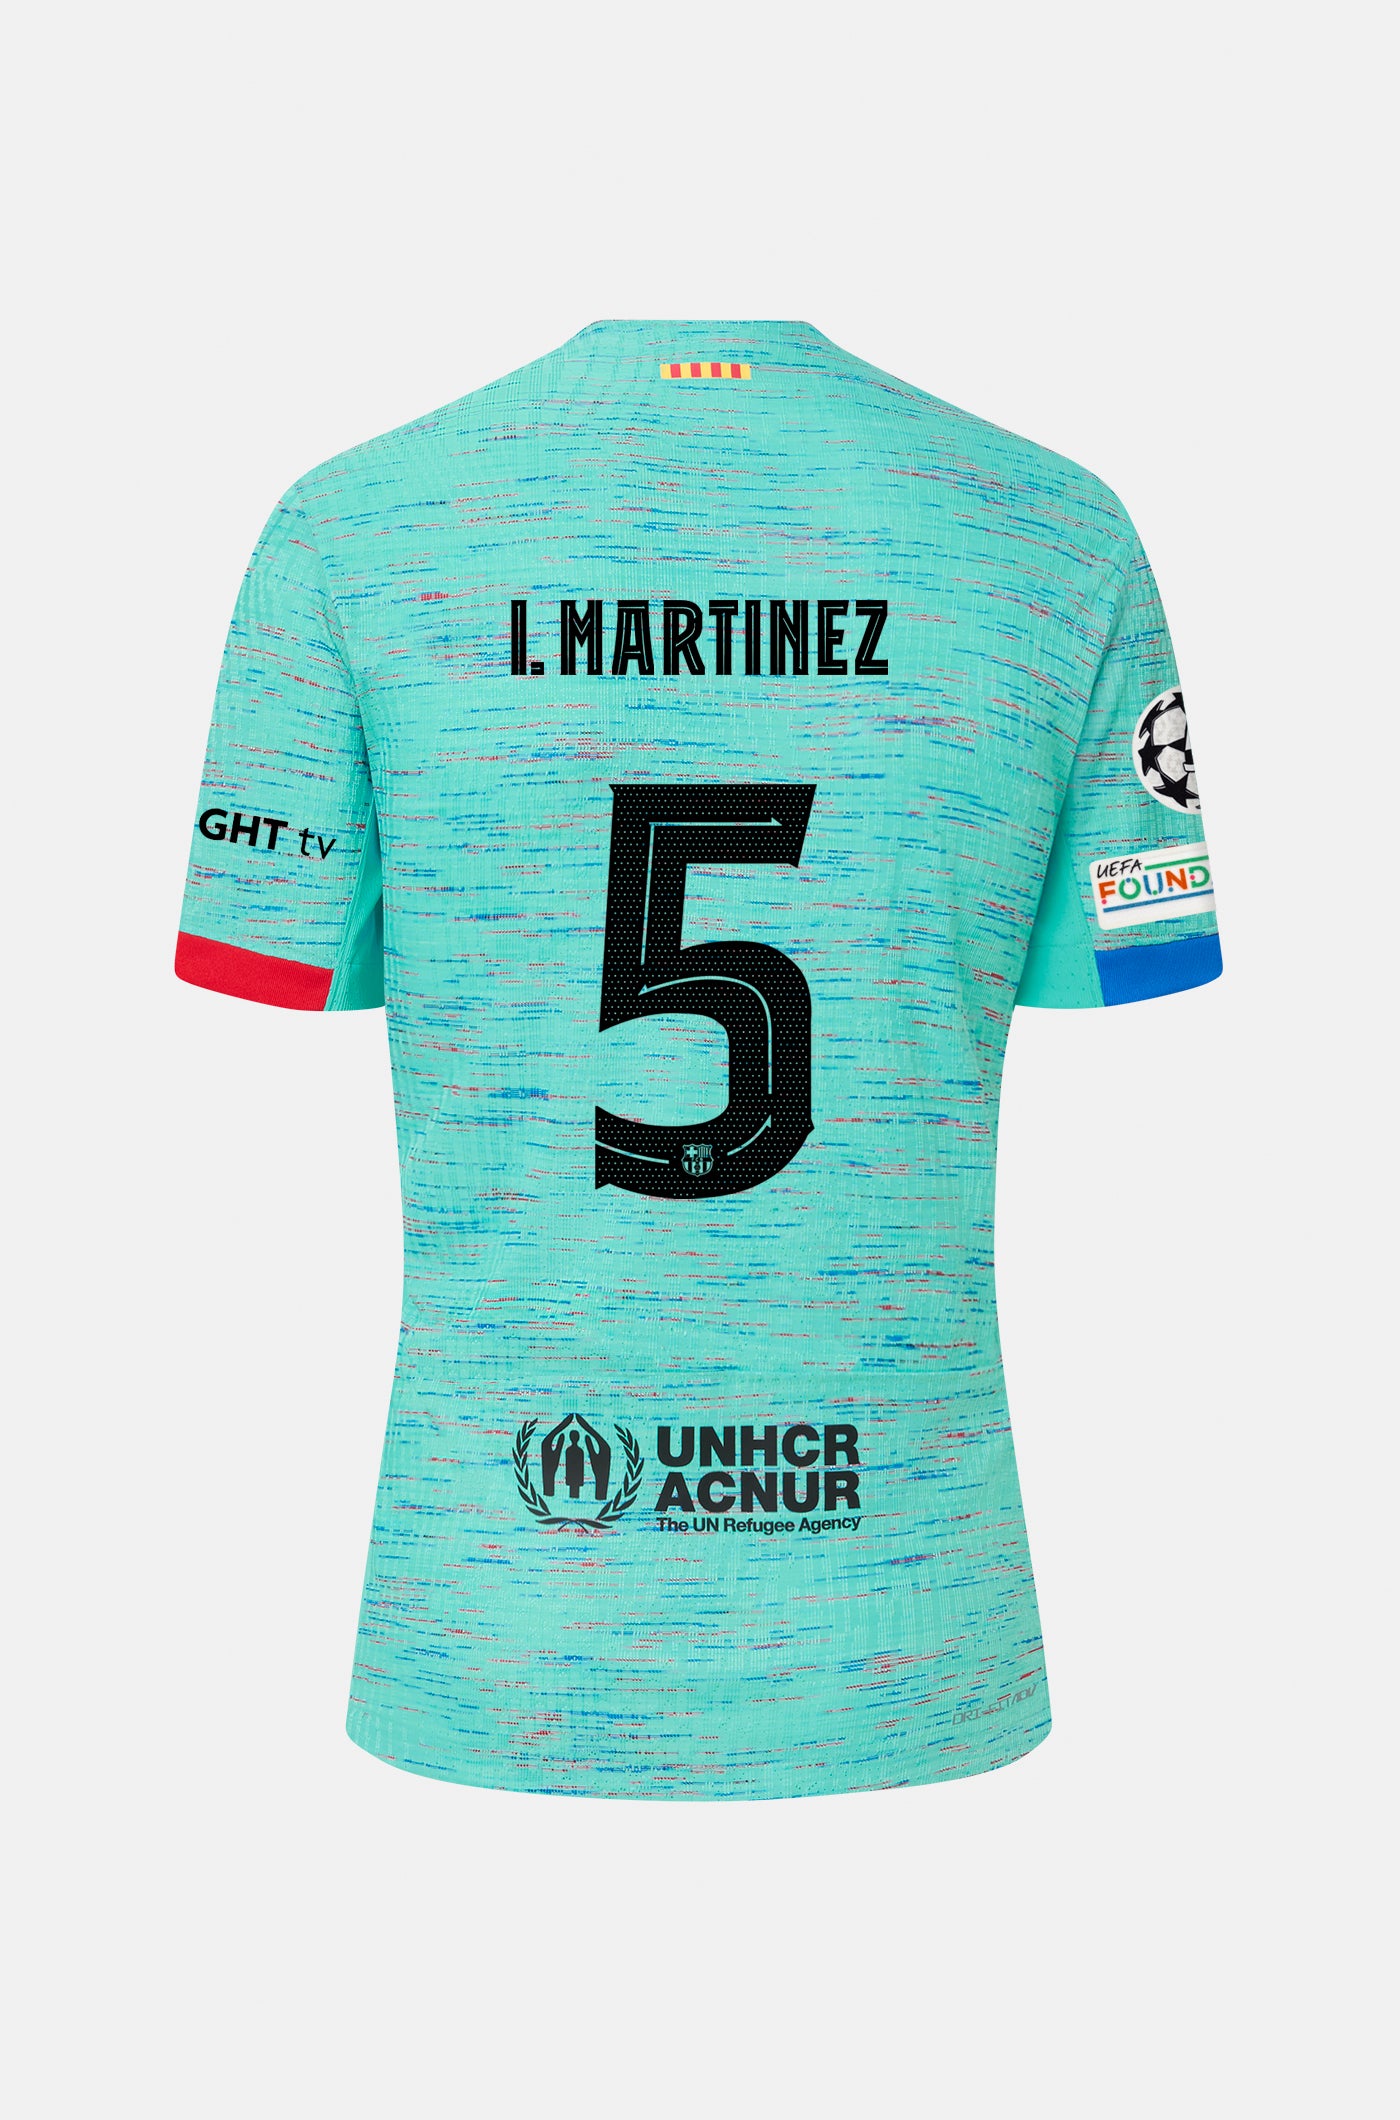 UCL FC Barcelona third shirt 23/24 Player’s Edition - I. MARTÍNEZ